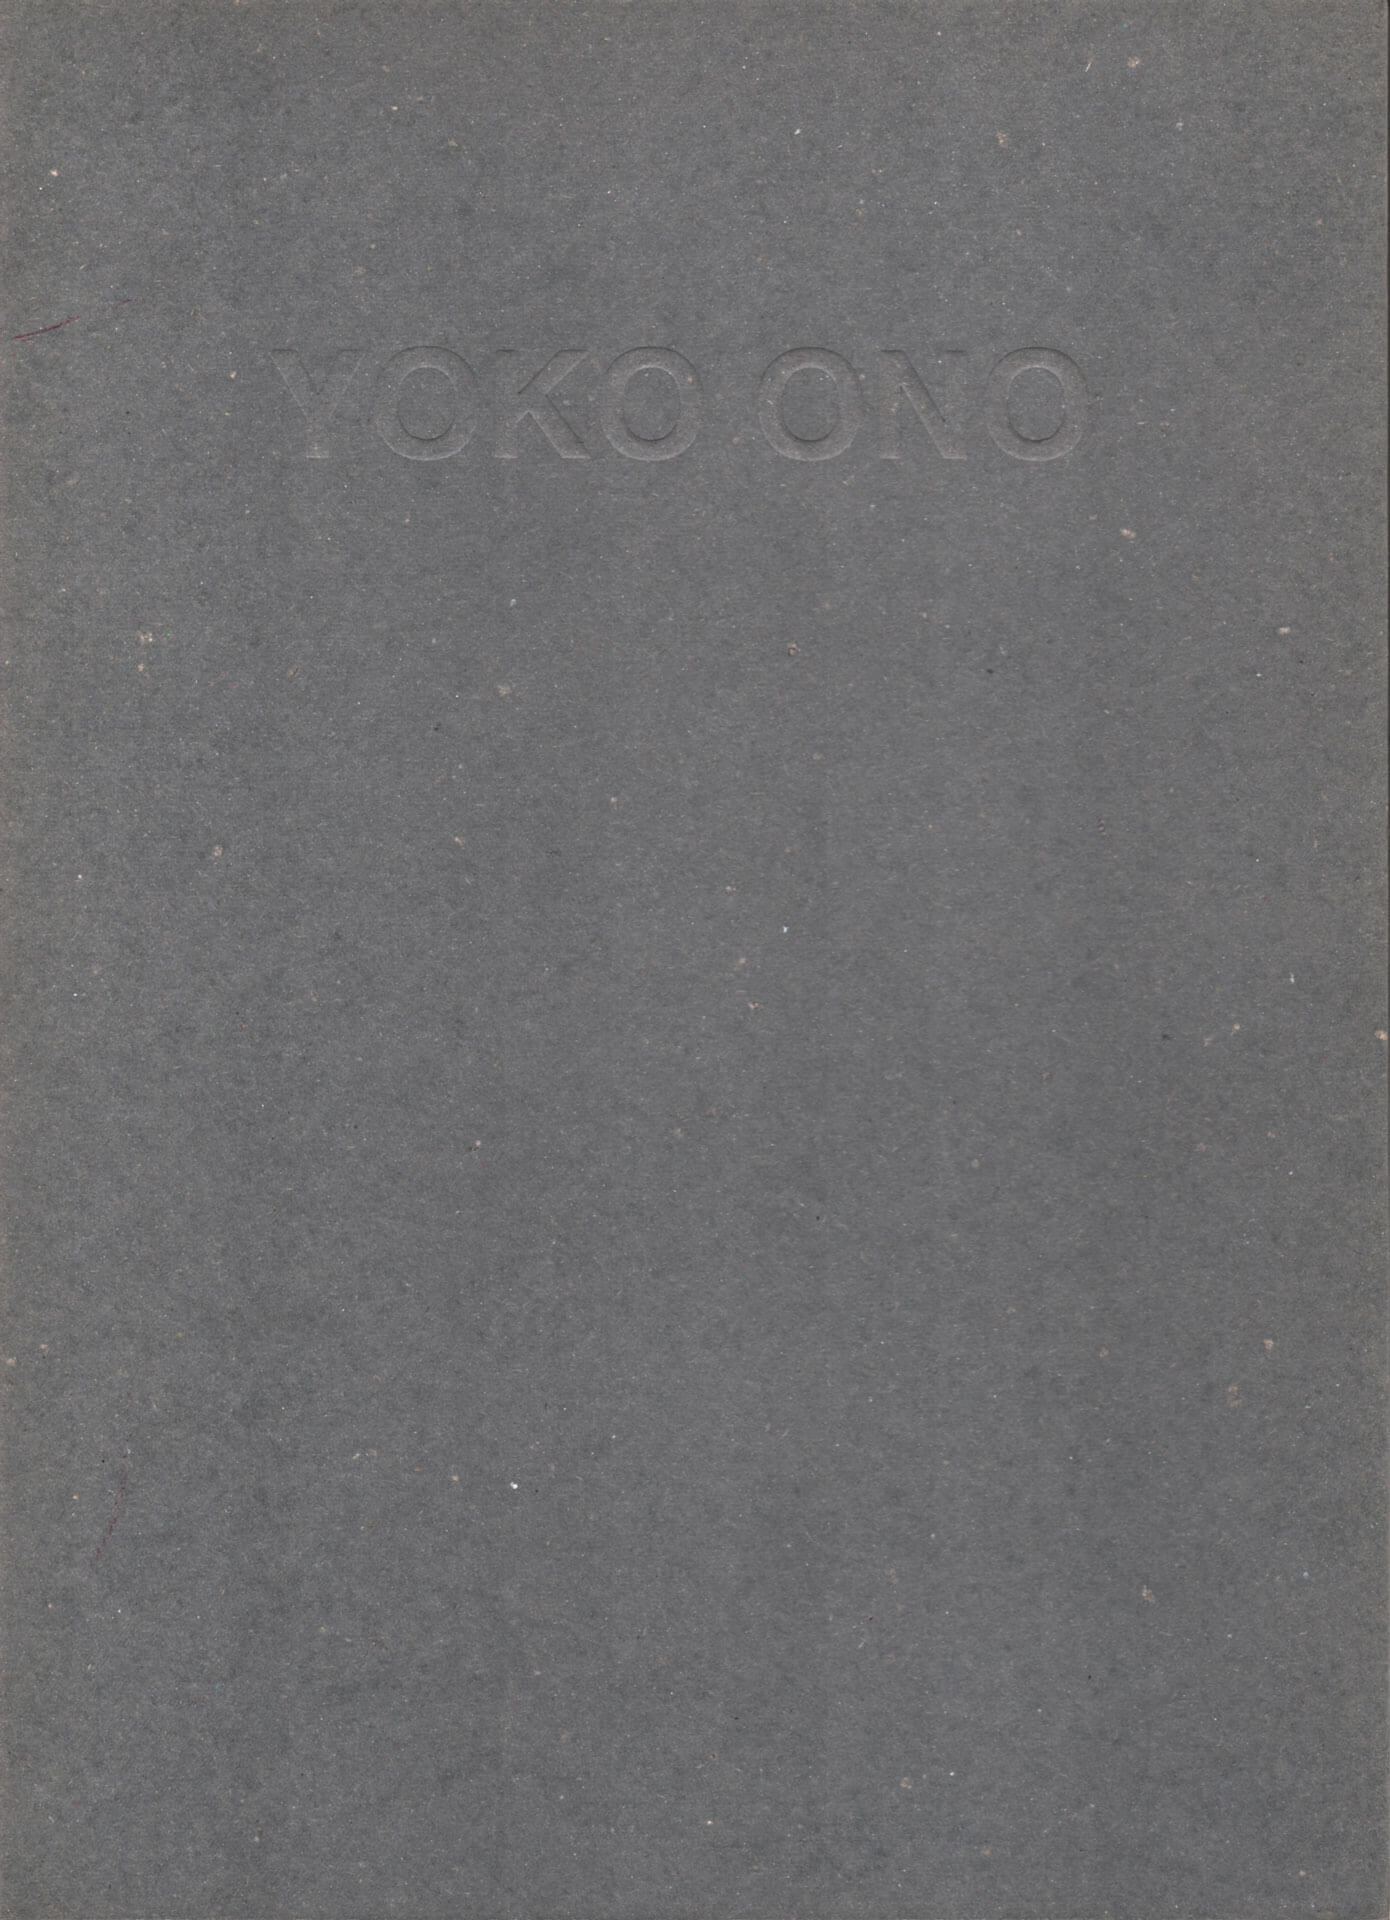 Studio Stefania Miscetti | Catalogues | Yoko Ono | Lighting Piece